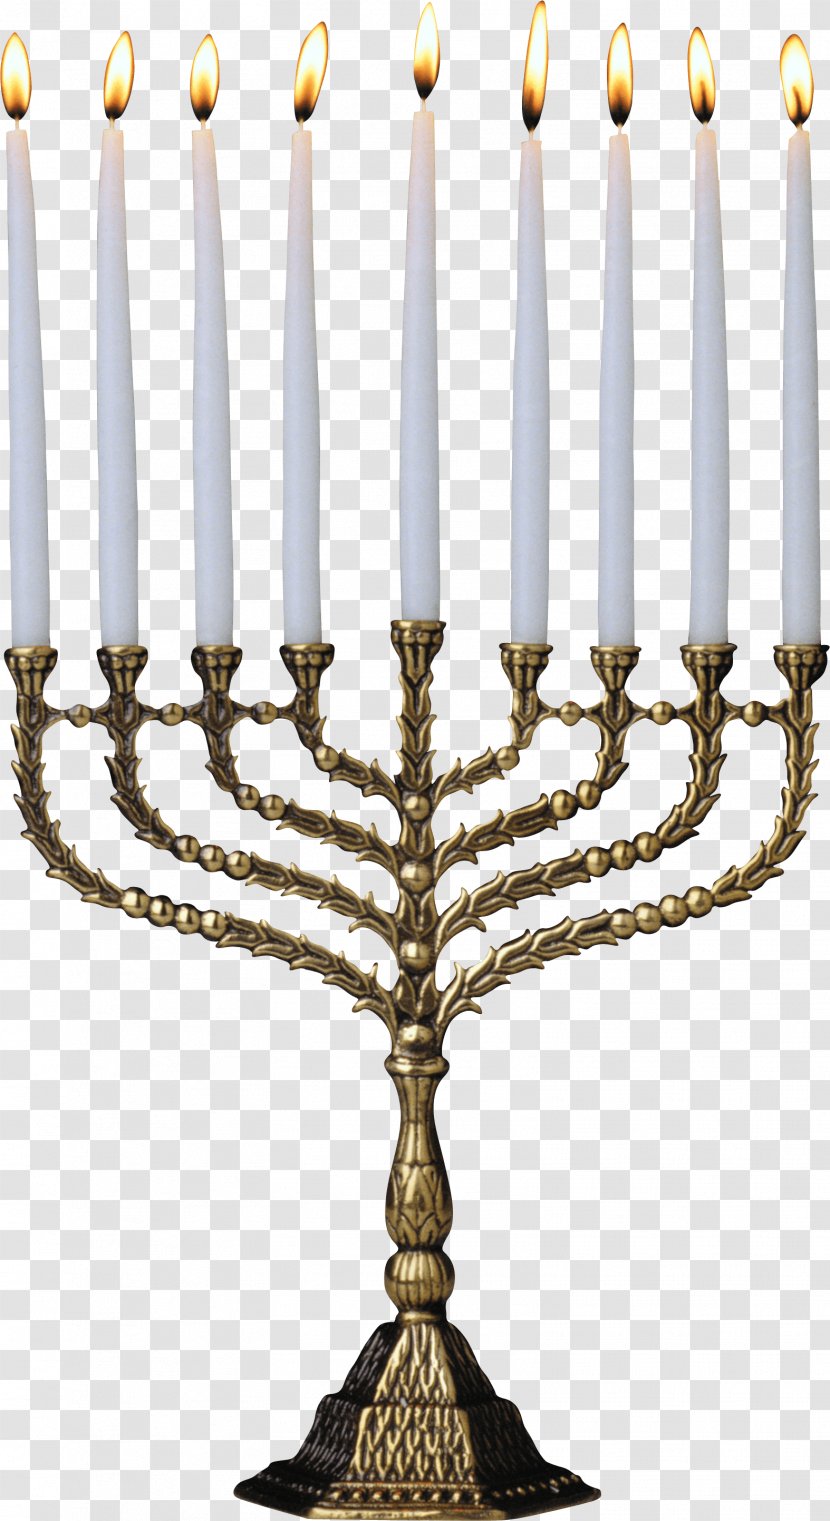 Candle Menorah - Jewish Holiday - Menora Image Transparent PNG